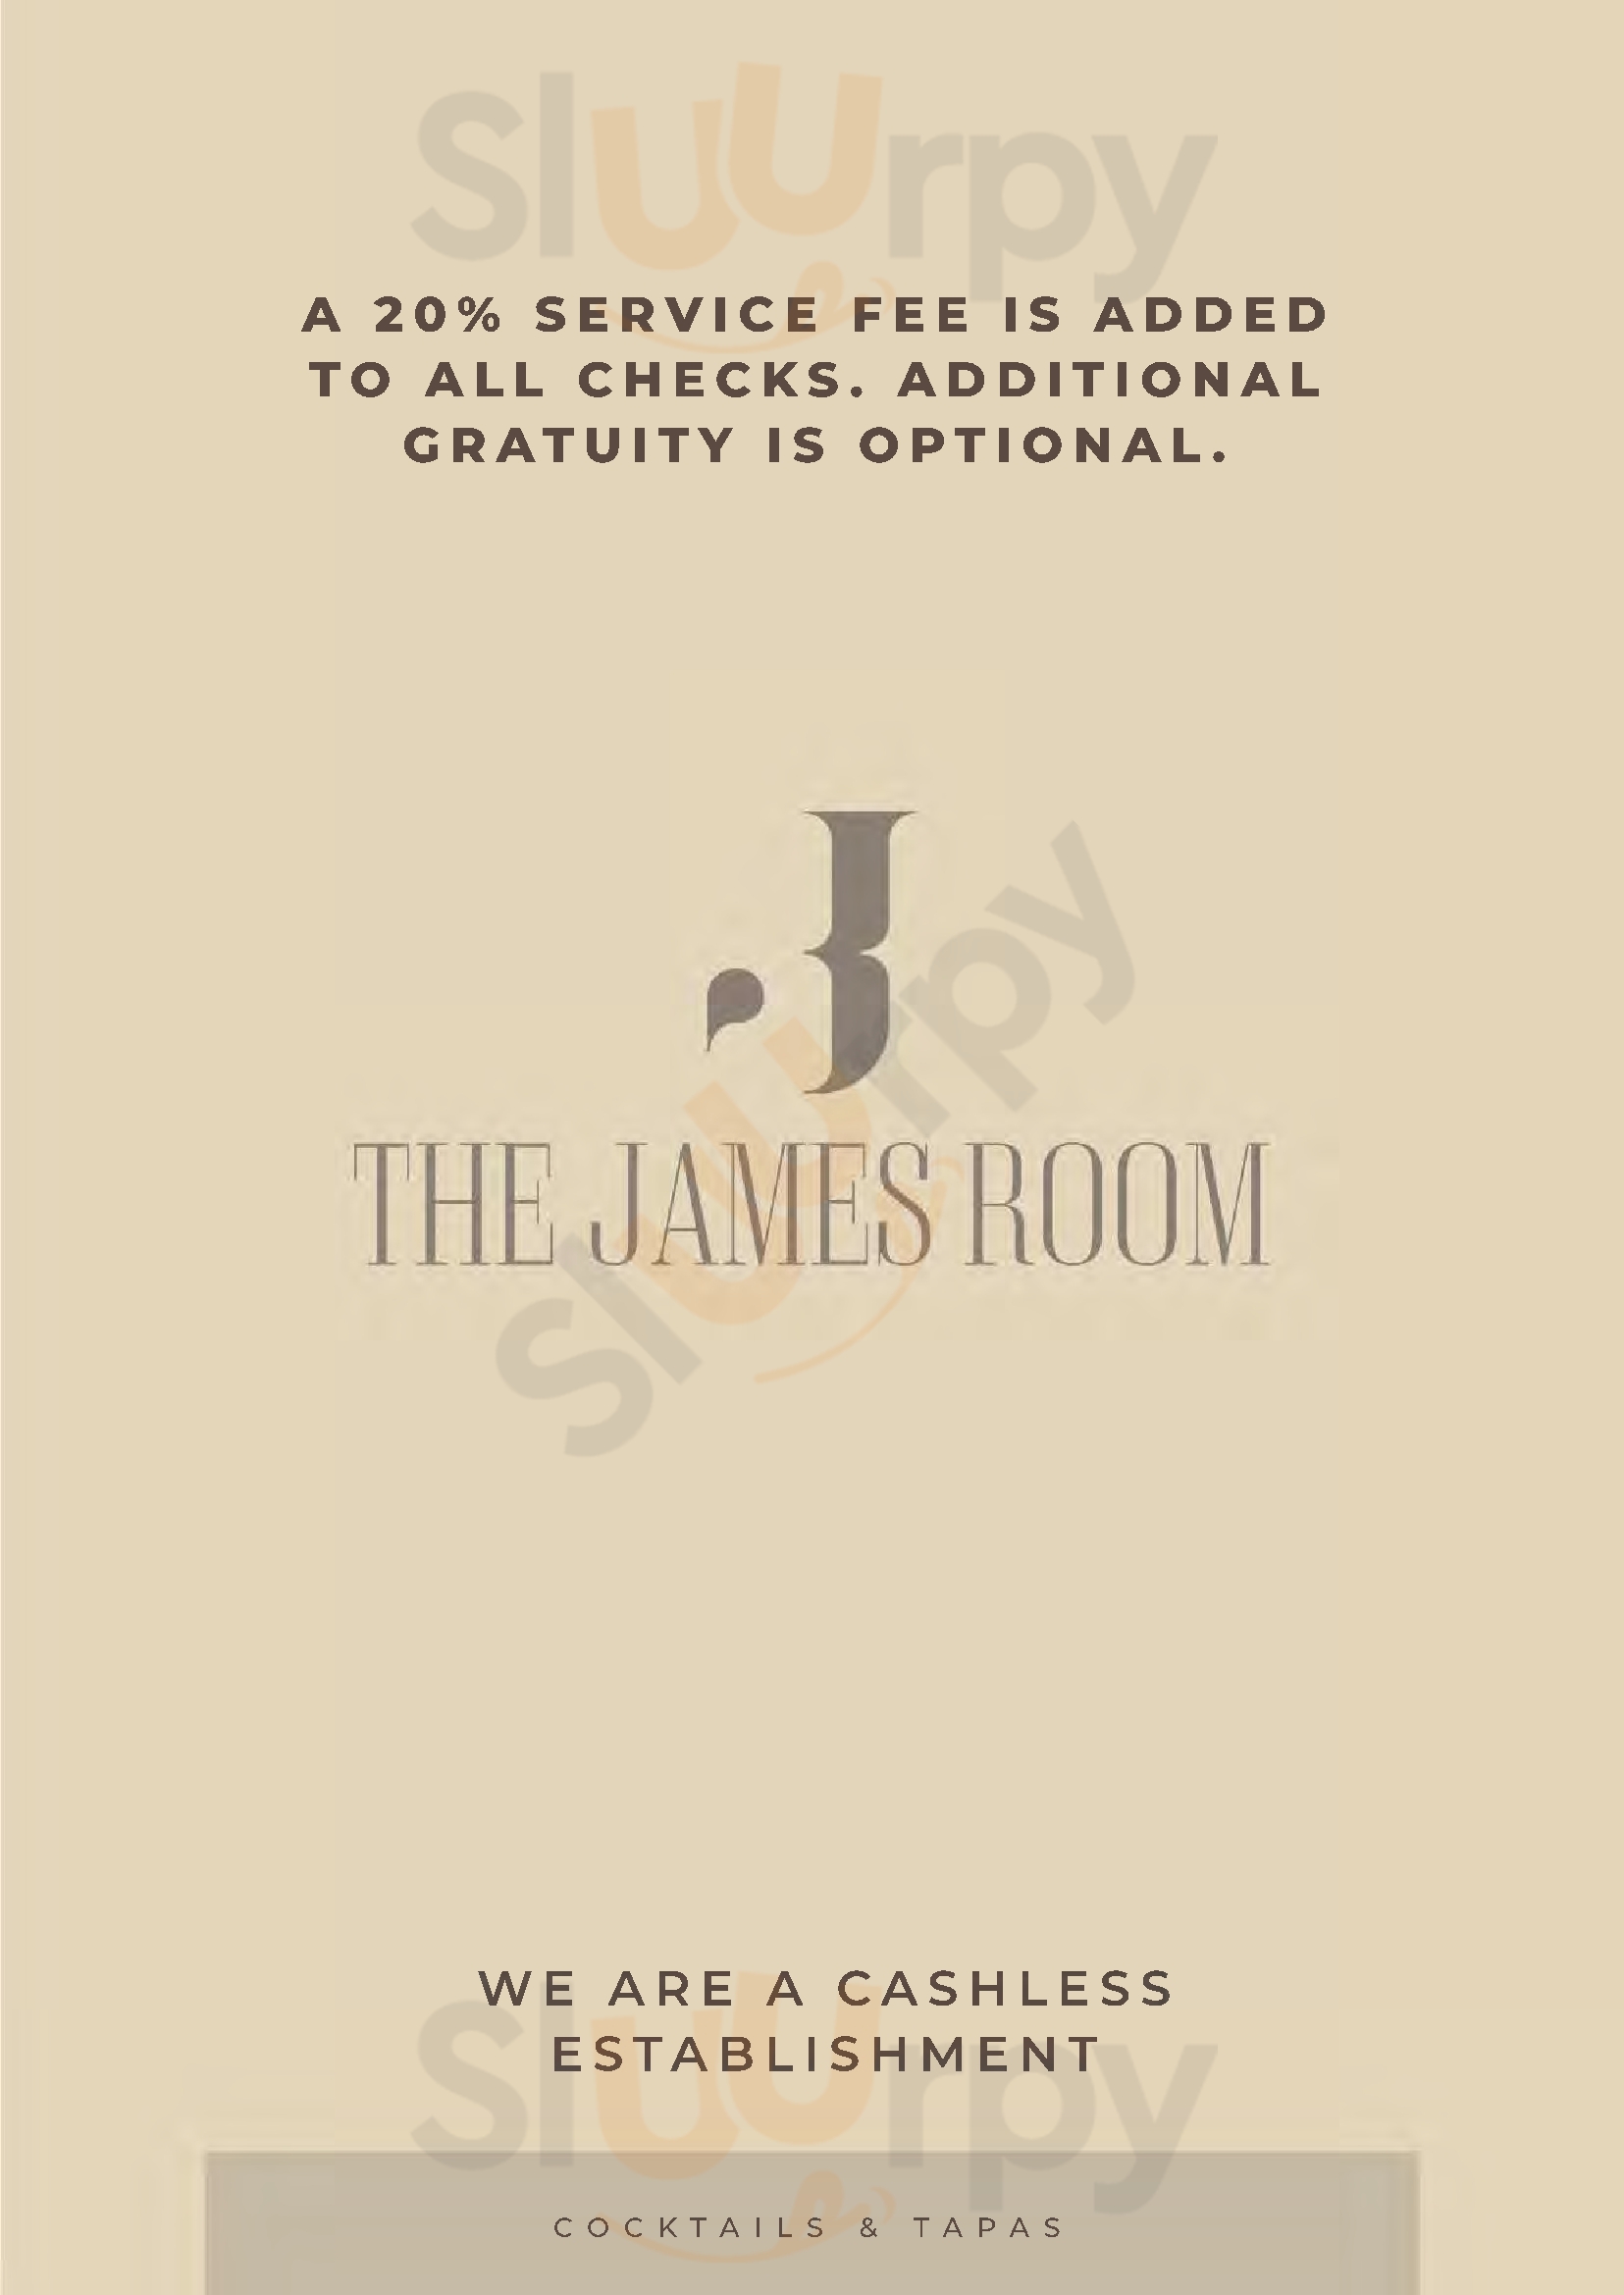 The James Room Atlanta Menu - 1